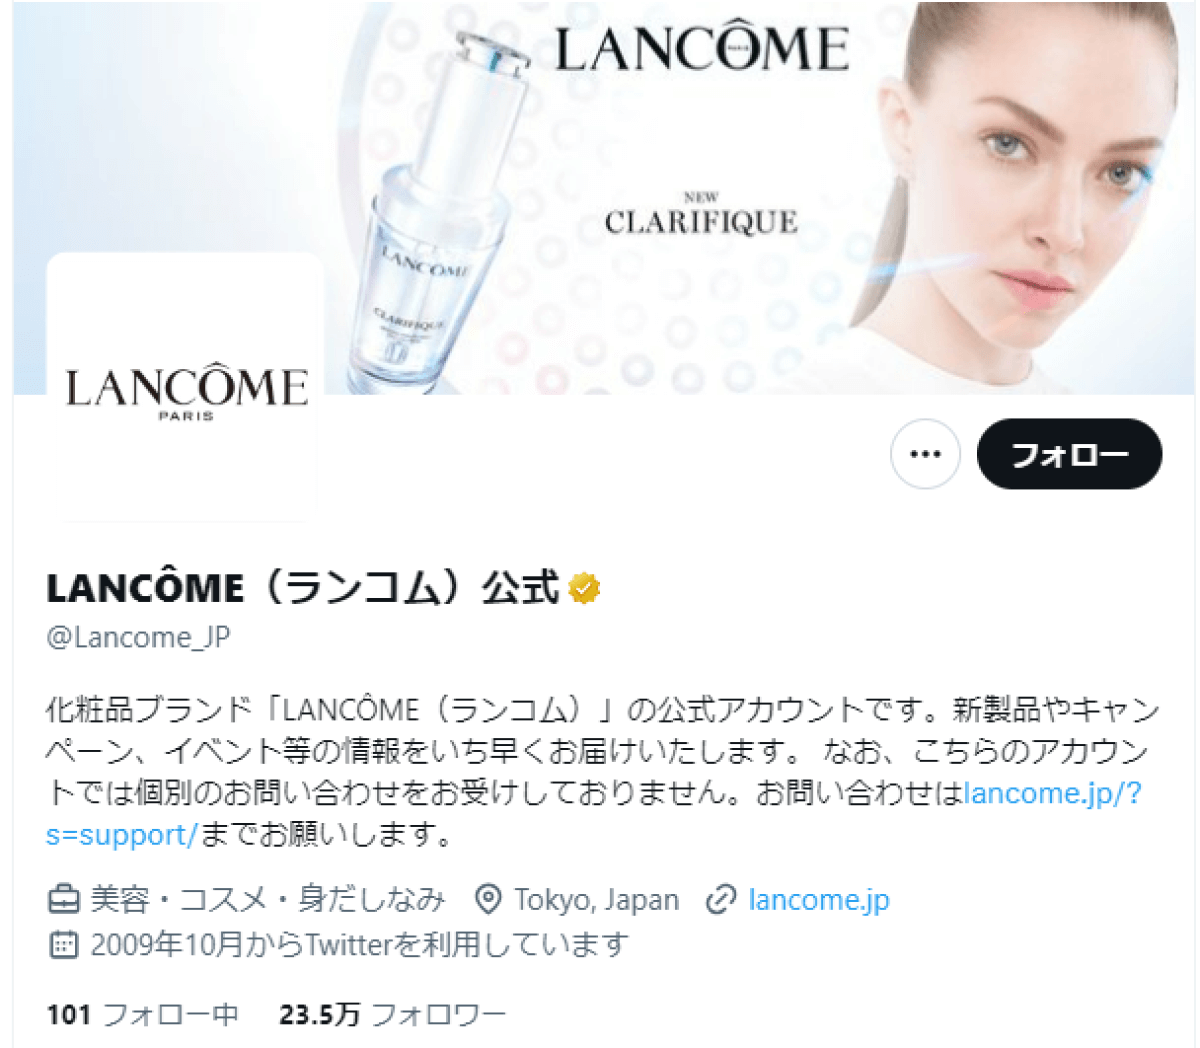 x-account-lancome-jp